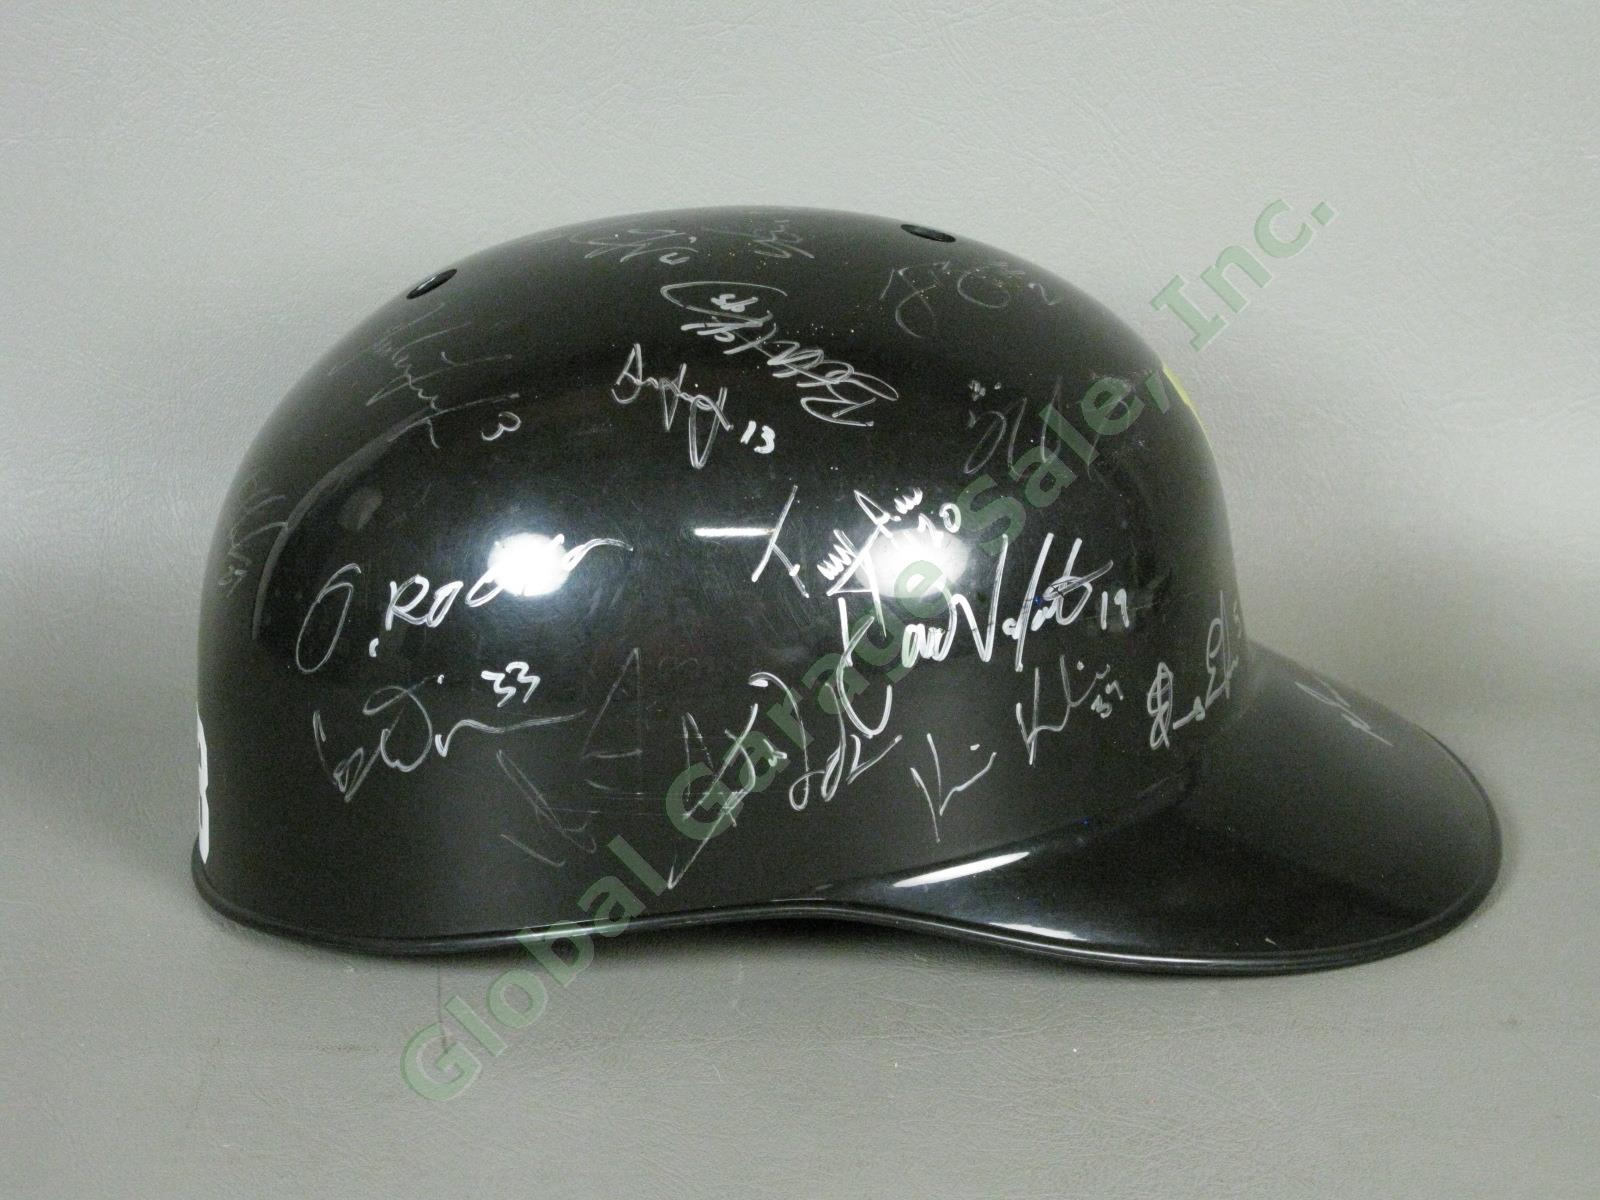 2013 Jamestown Jammers Team Signed Baseball Helmet NYPL Pittsburgh Pirates NR 1